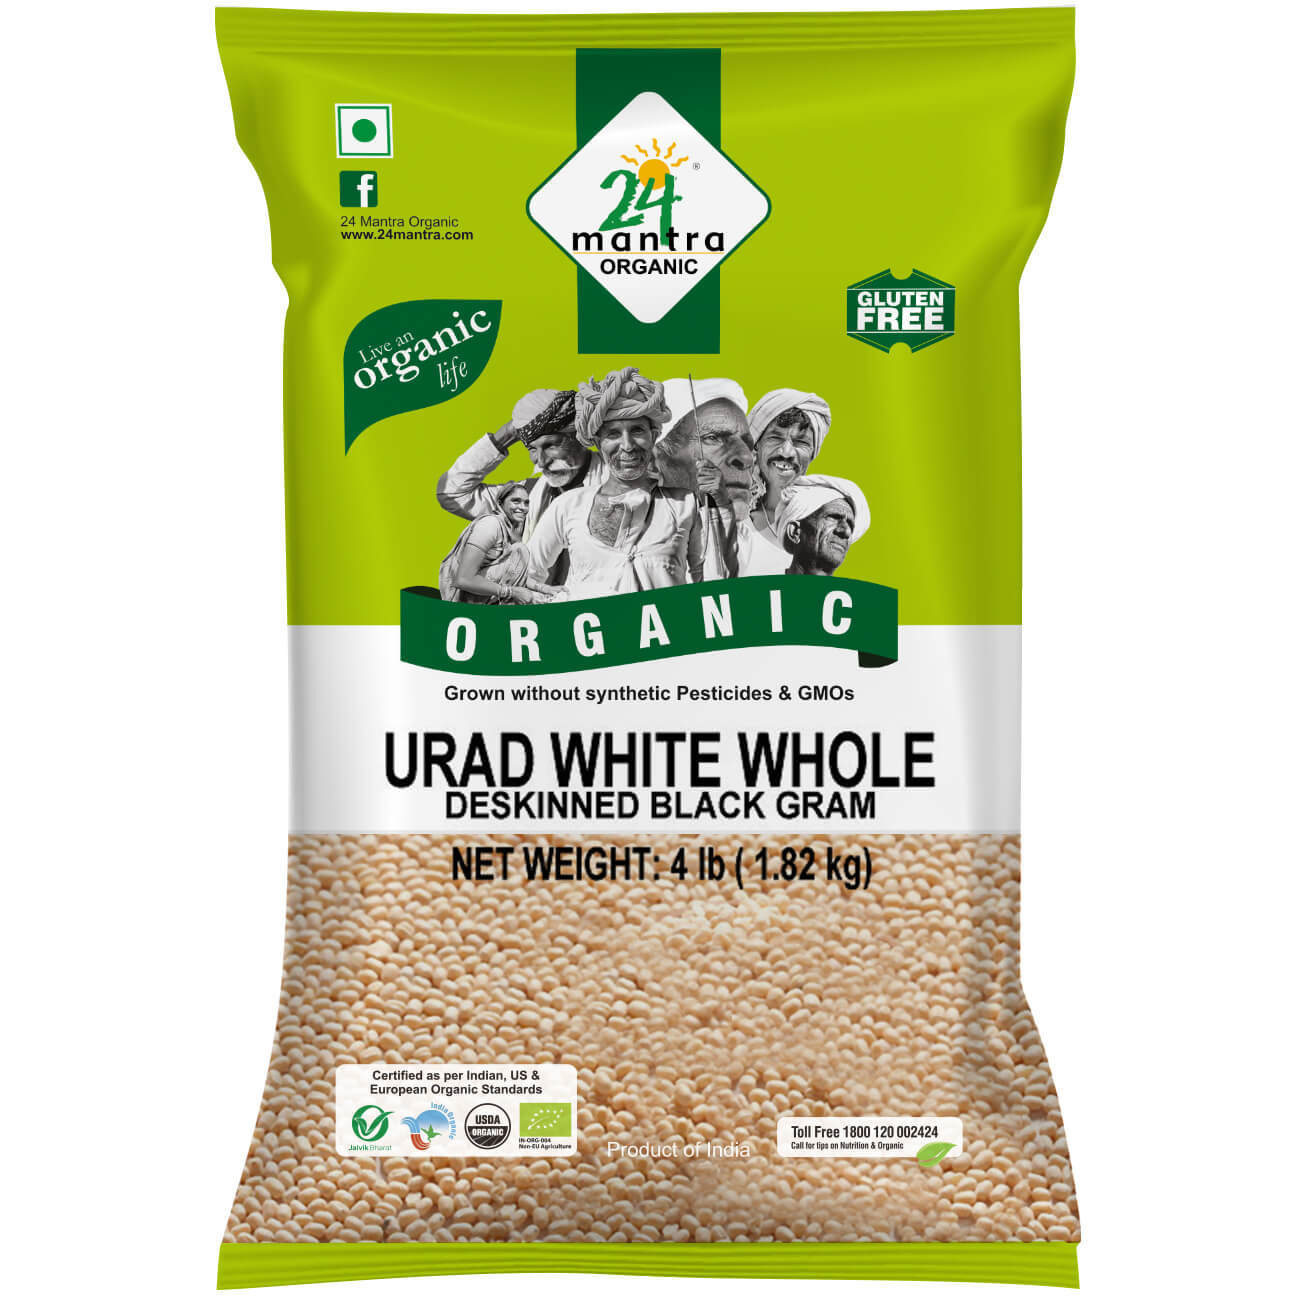 Case of 14 - 24 Mantra Organic Urad White Whole - 2 Lb (908 Gm) [50% Off]